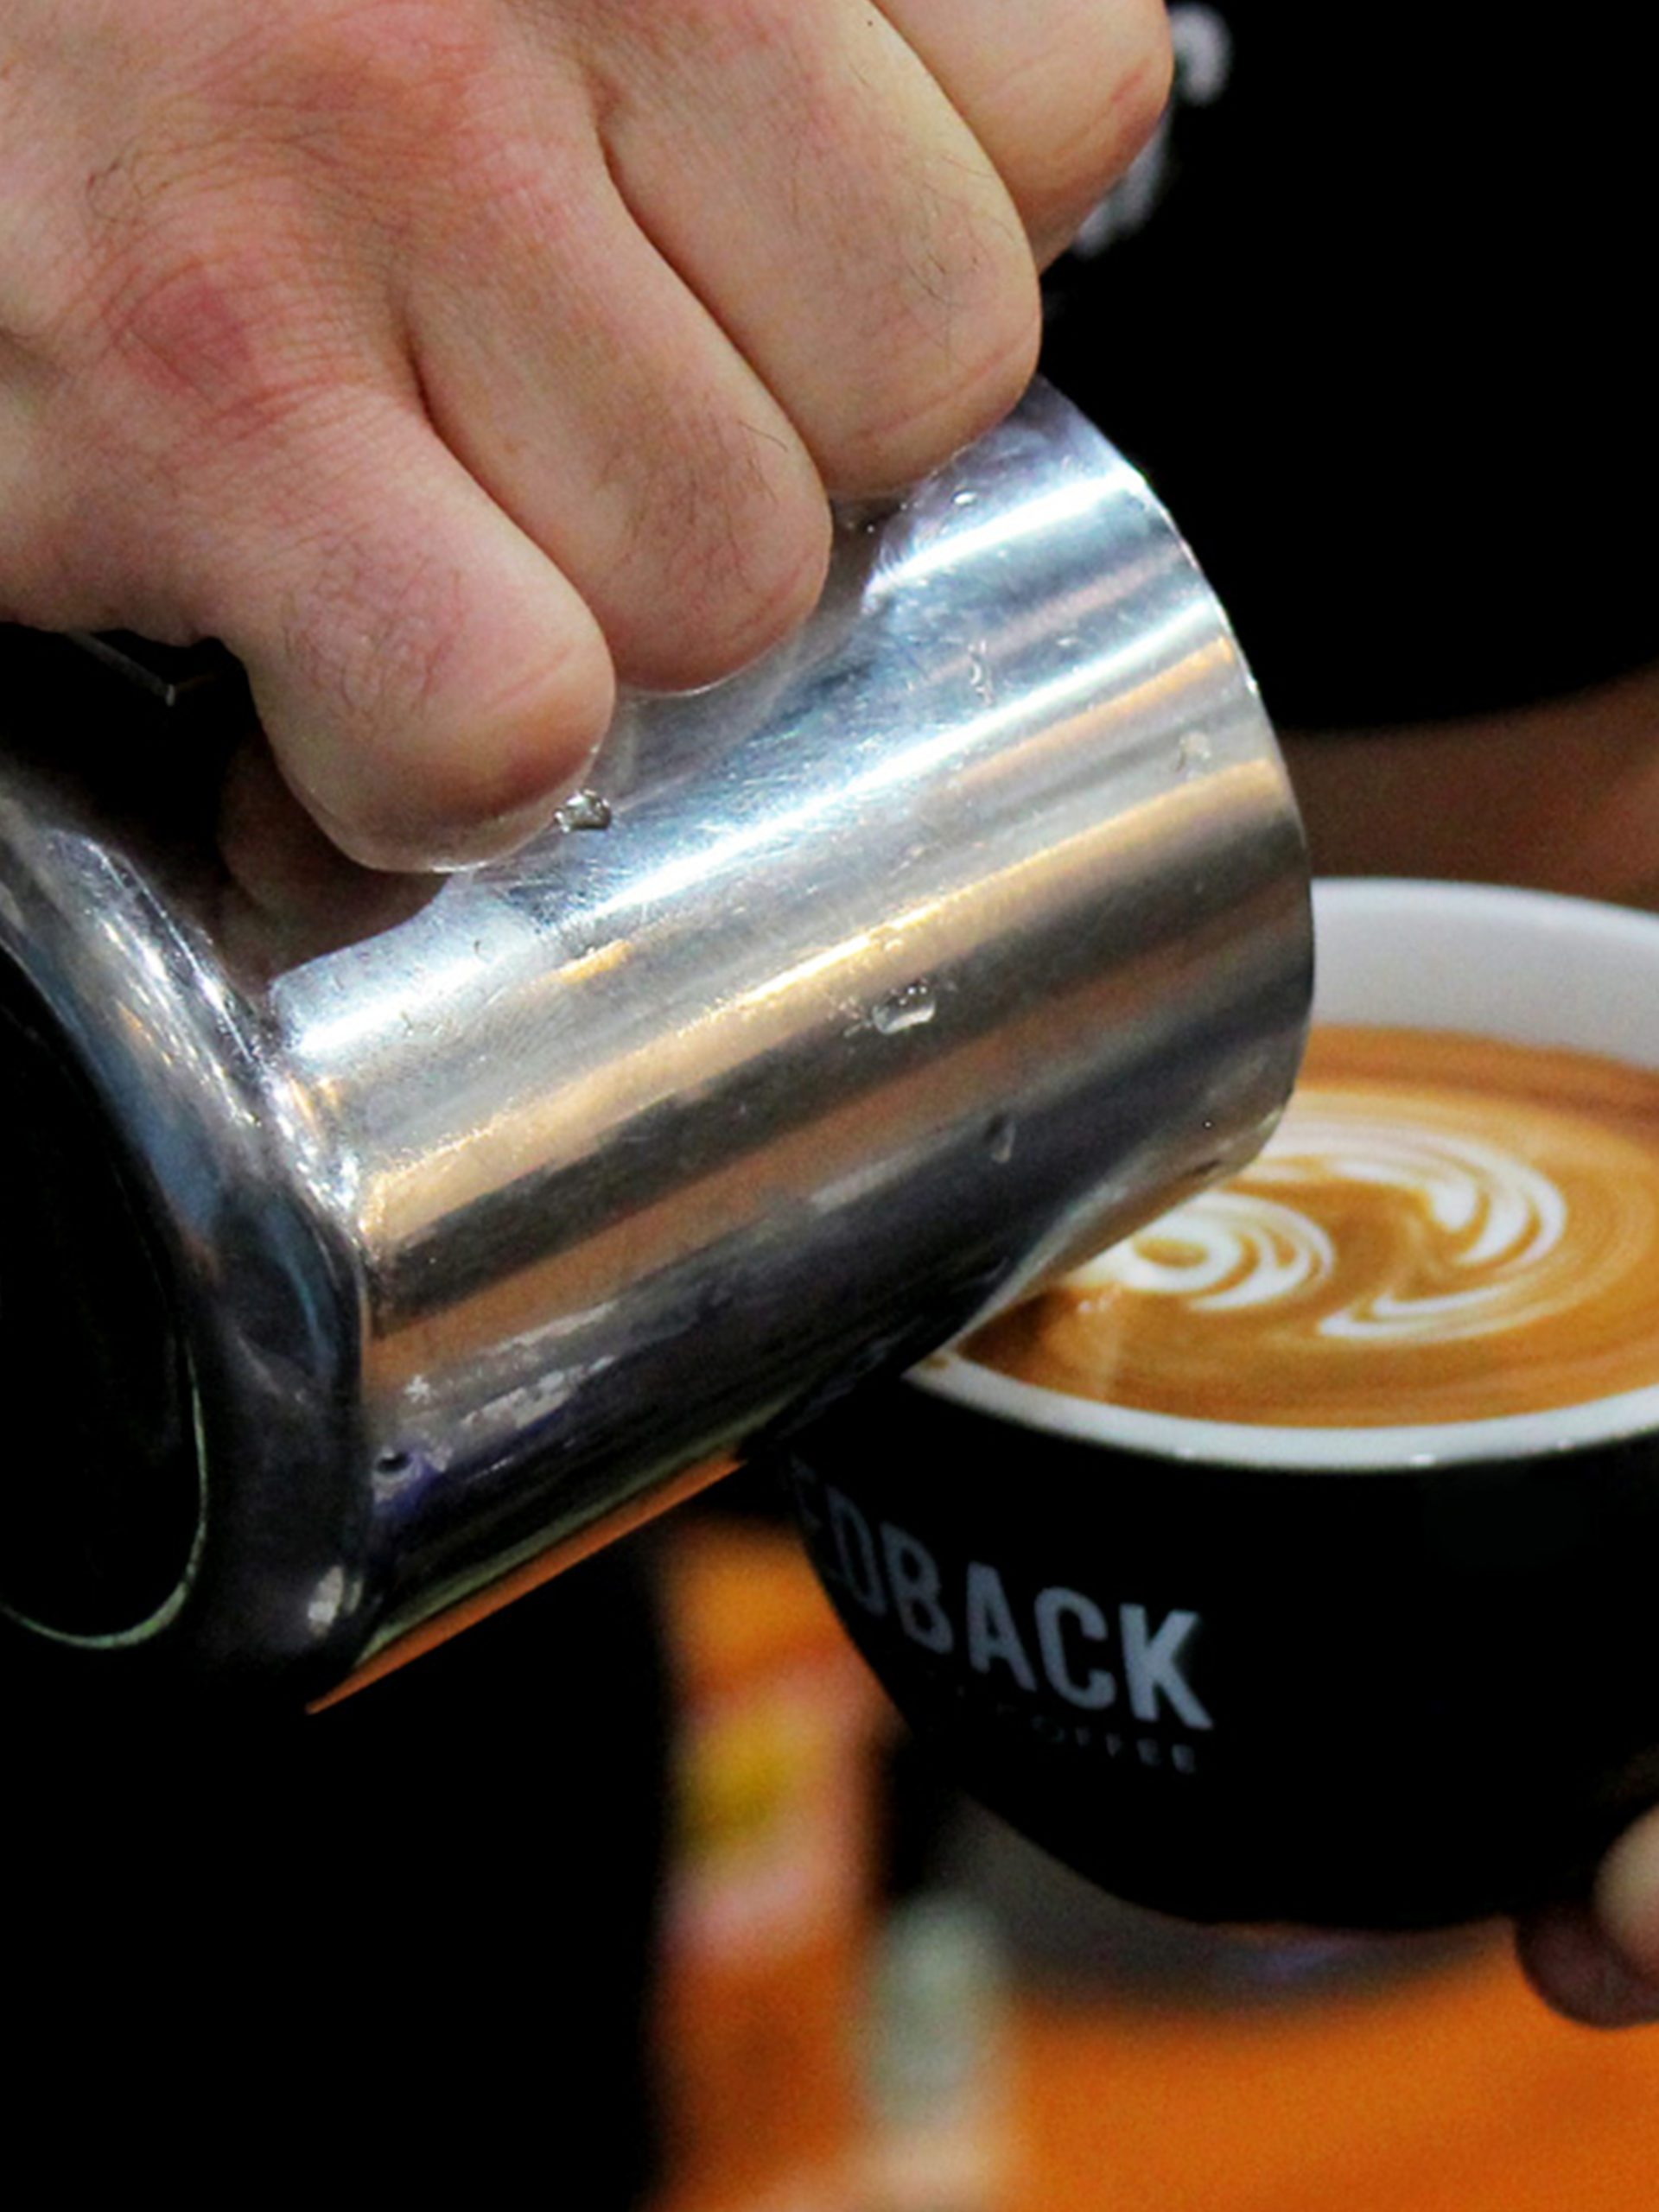 Redback Coffee barista making latte art